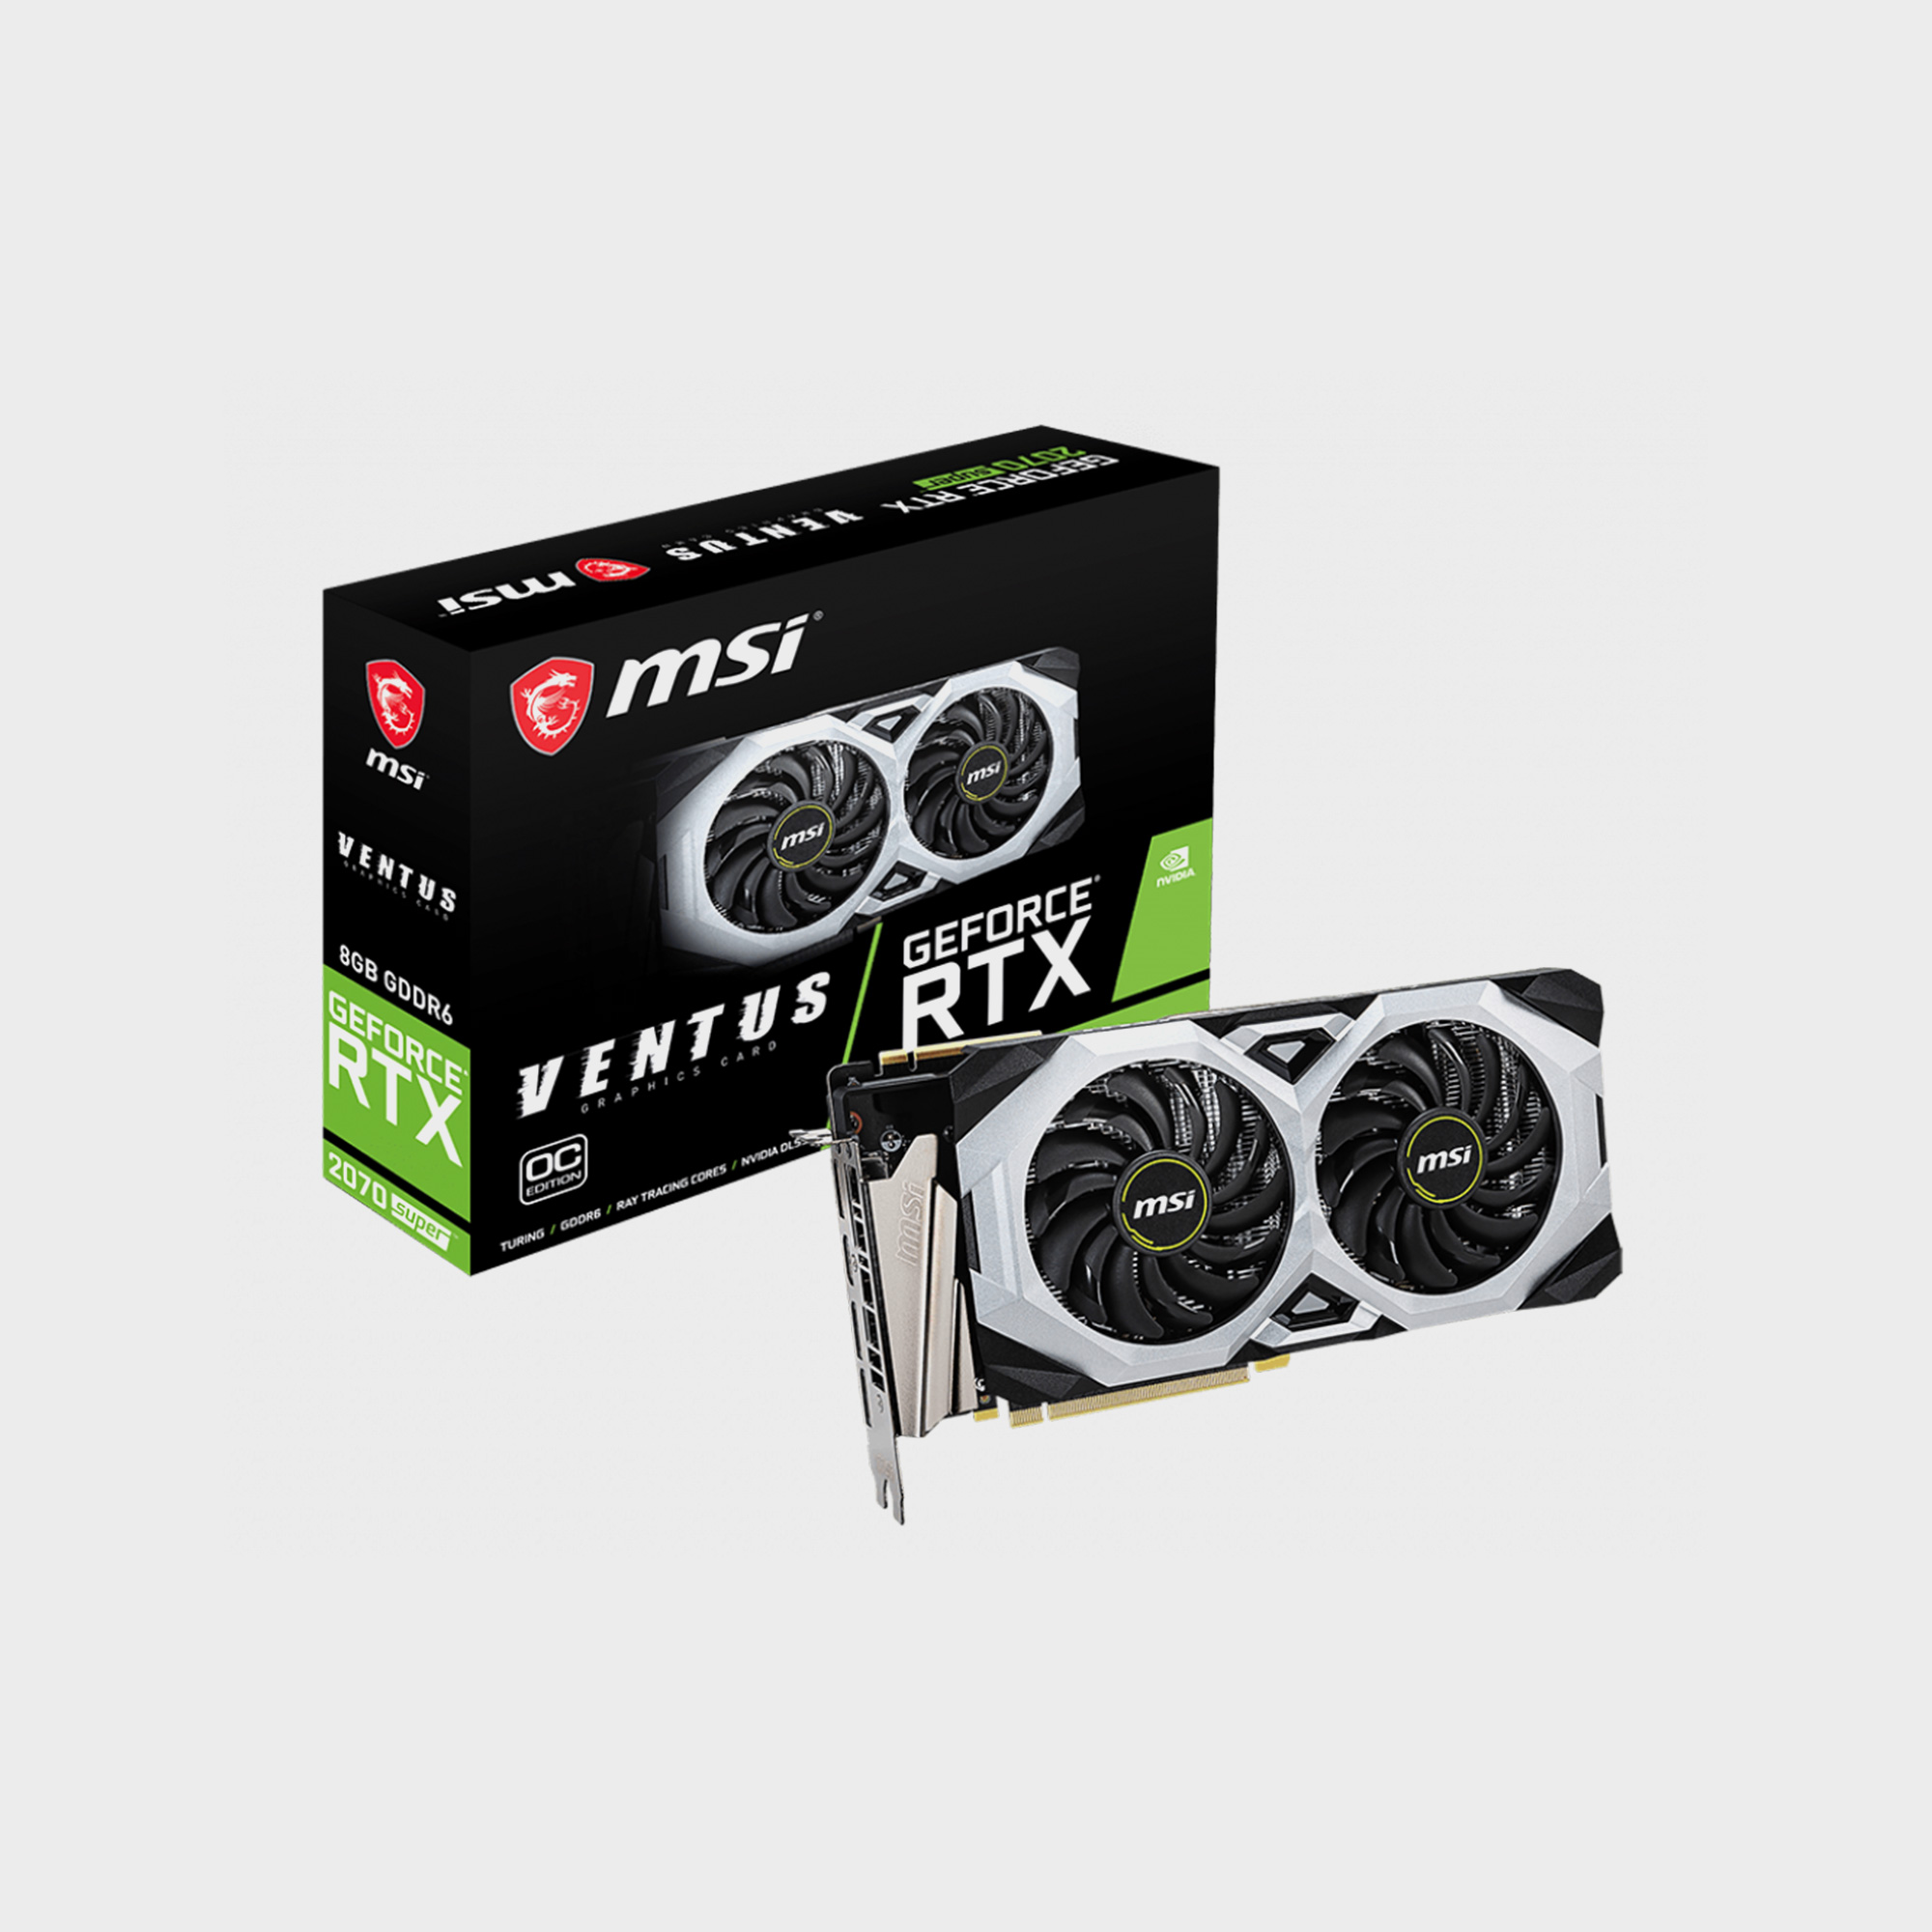 MSI GeForce RTX 2070 VENTUS 8G - タブレット